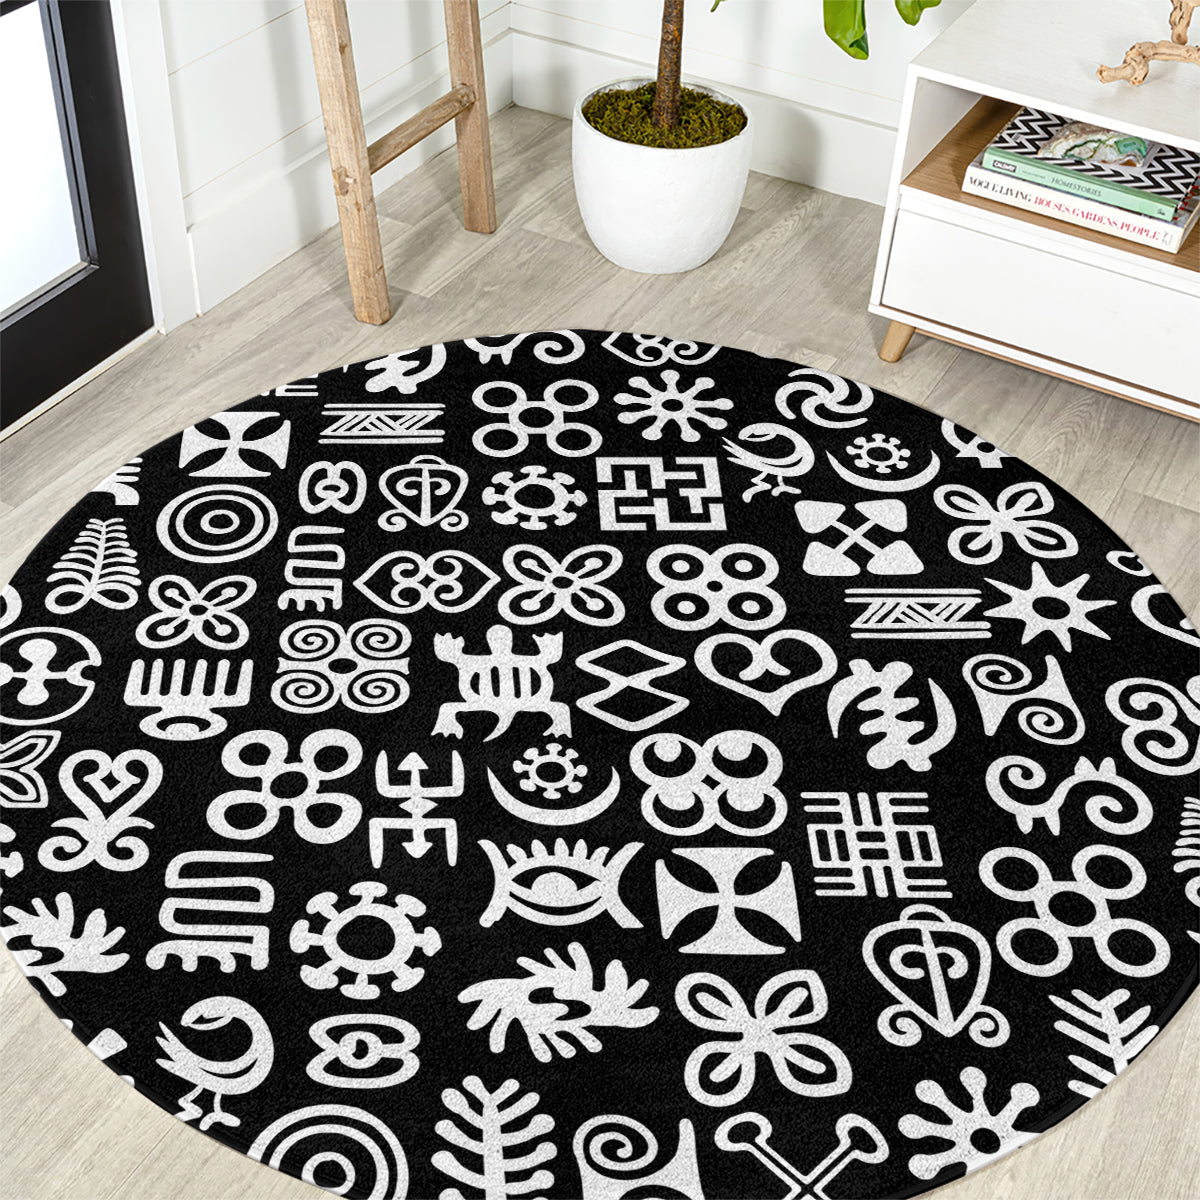 Mix Adinkra Round Carpet Black Pattern